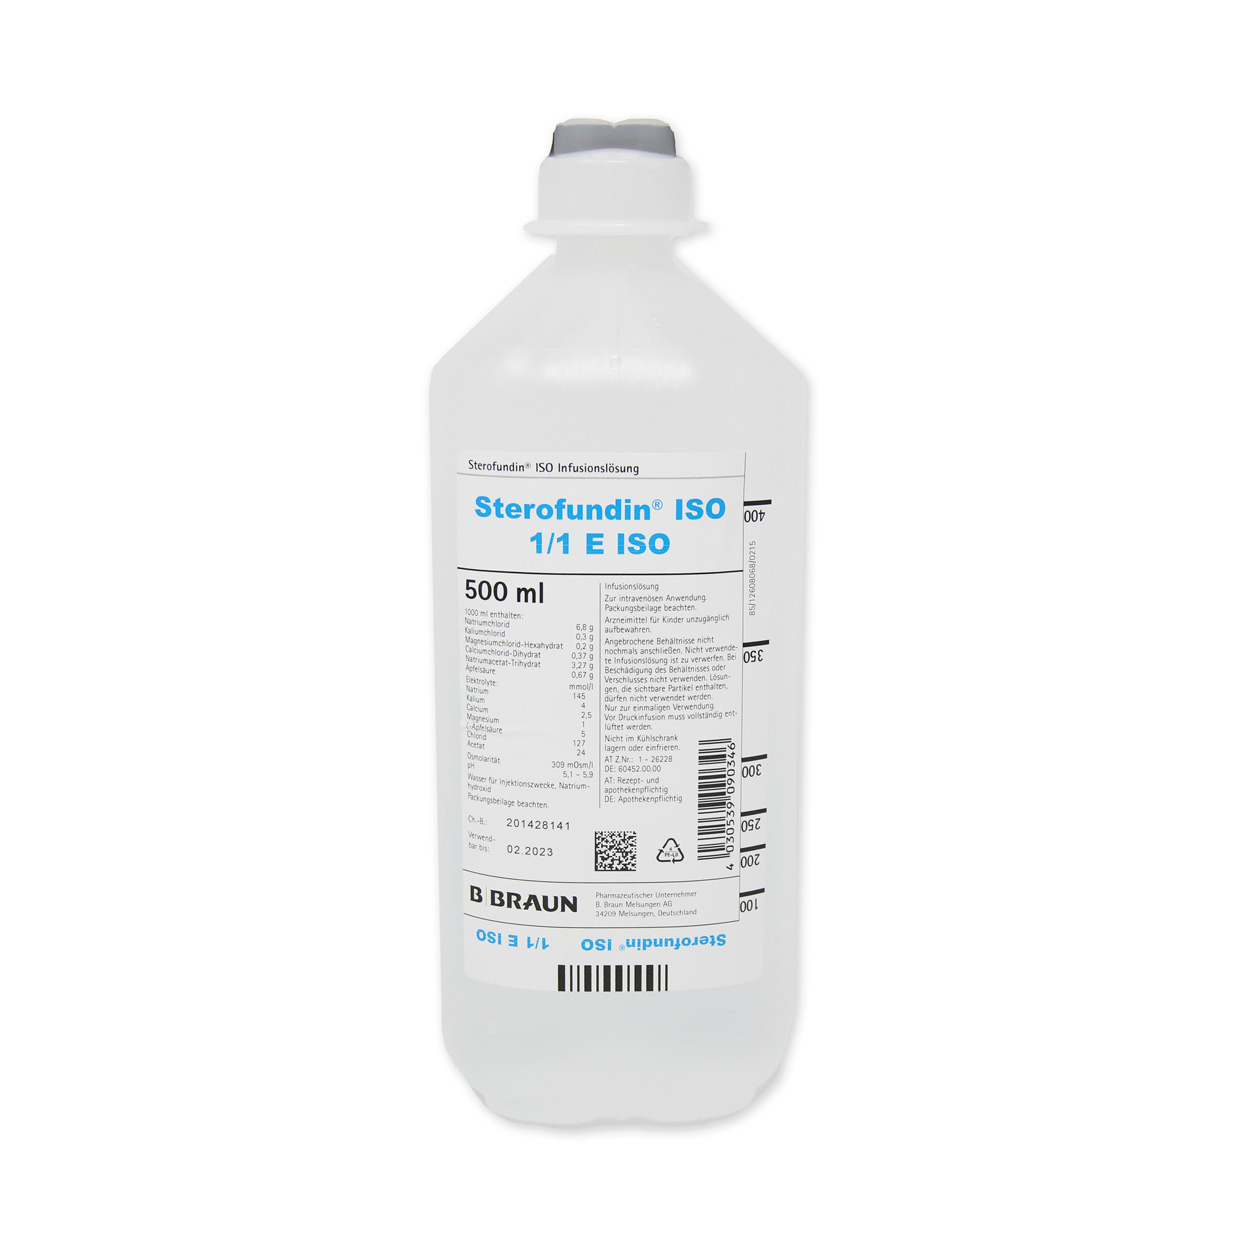 Sterofundin ISO Ecoflac Plus Infusionslösung 500 ml - Karton à 10 Flaschen